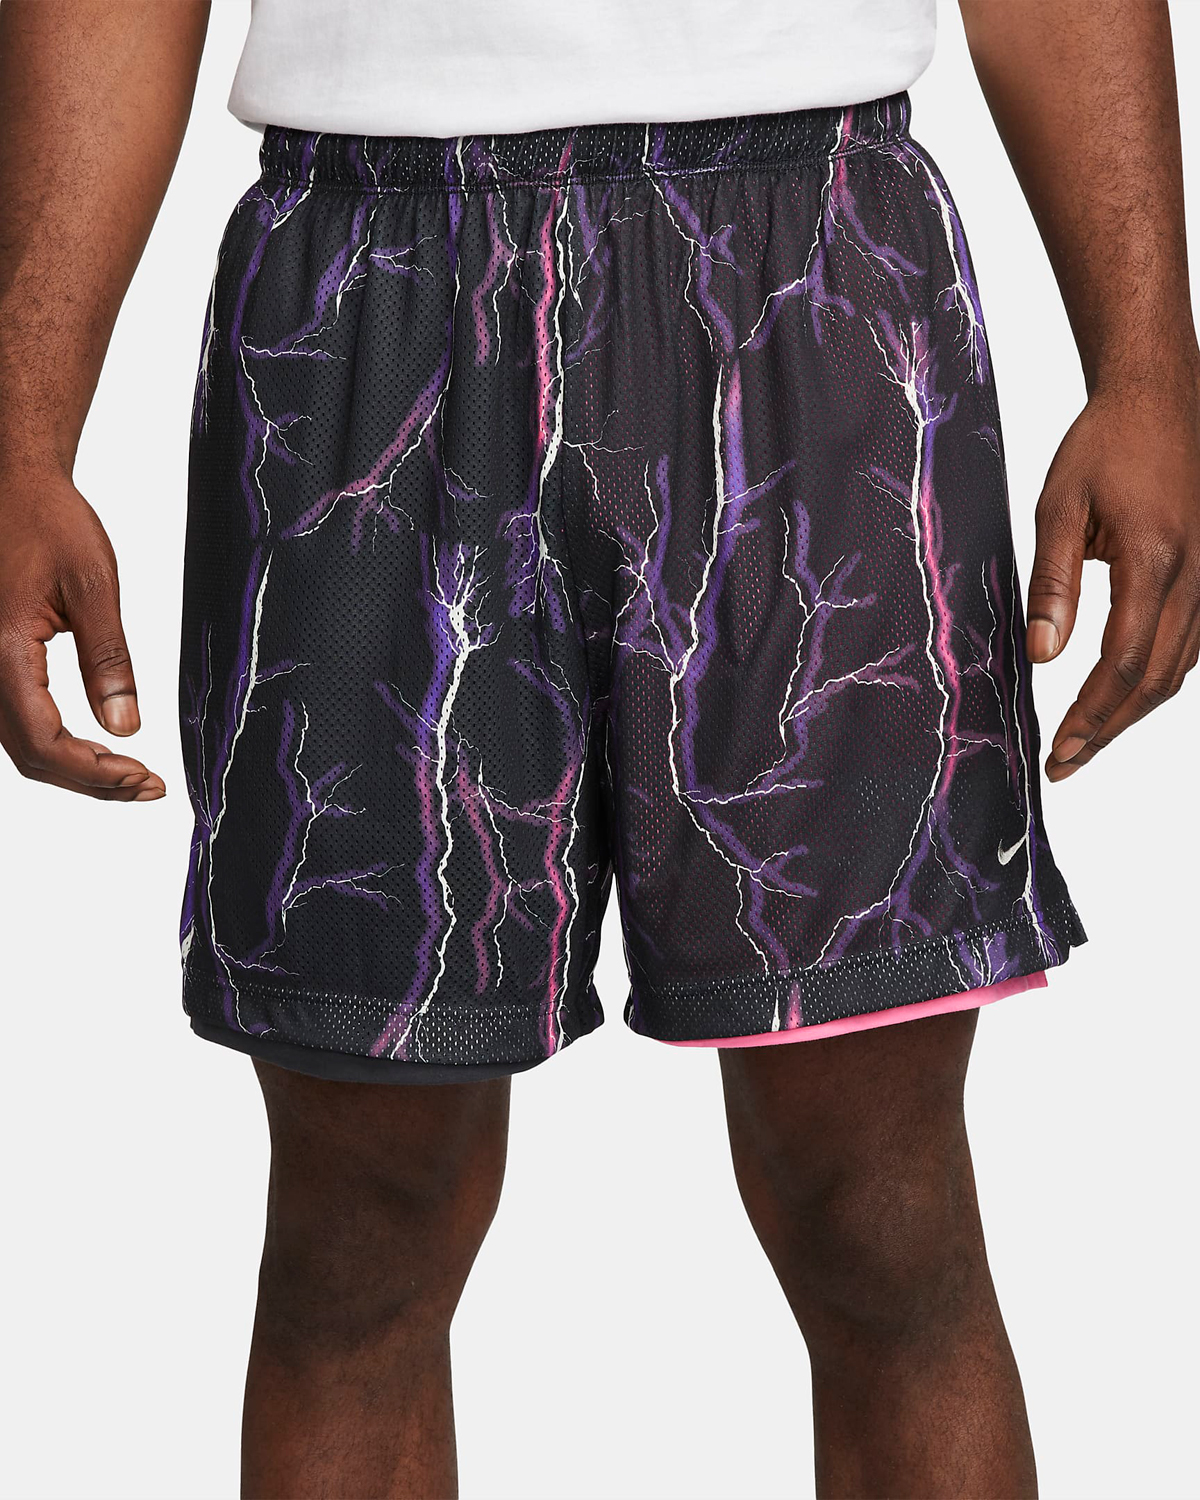 Nike-Standard-Issue-Basketball-Shorts-Black-Action-Grape